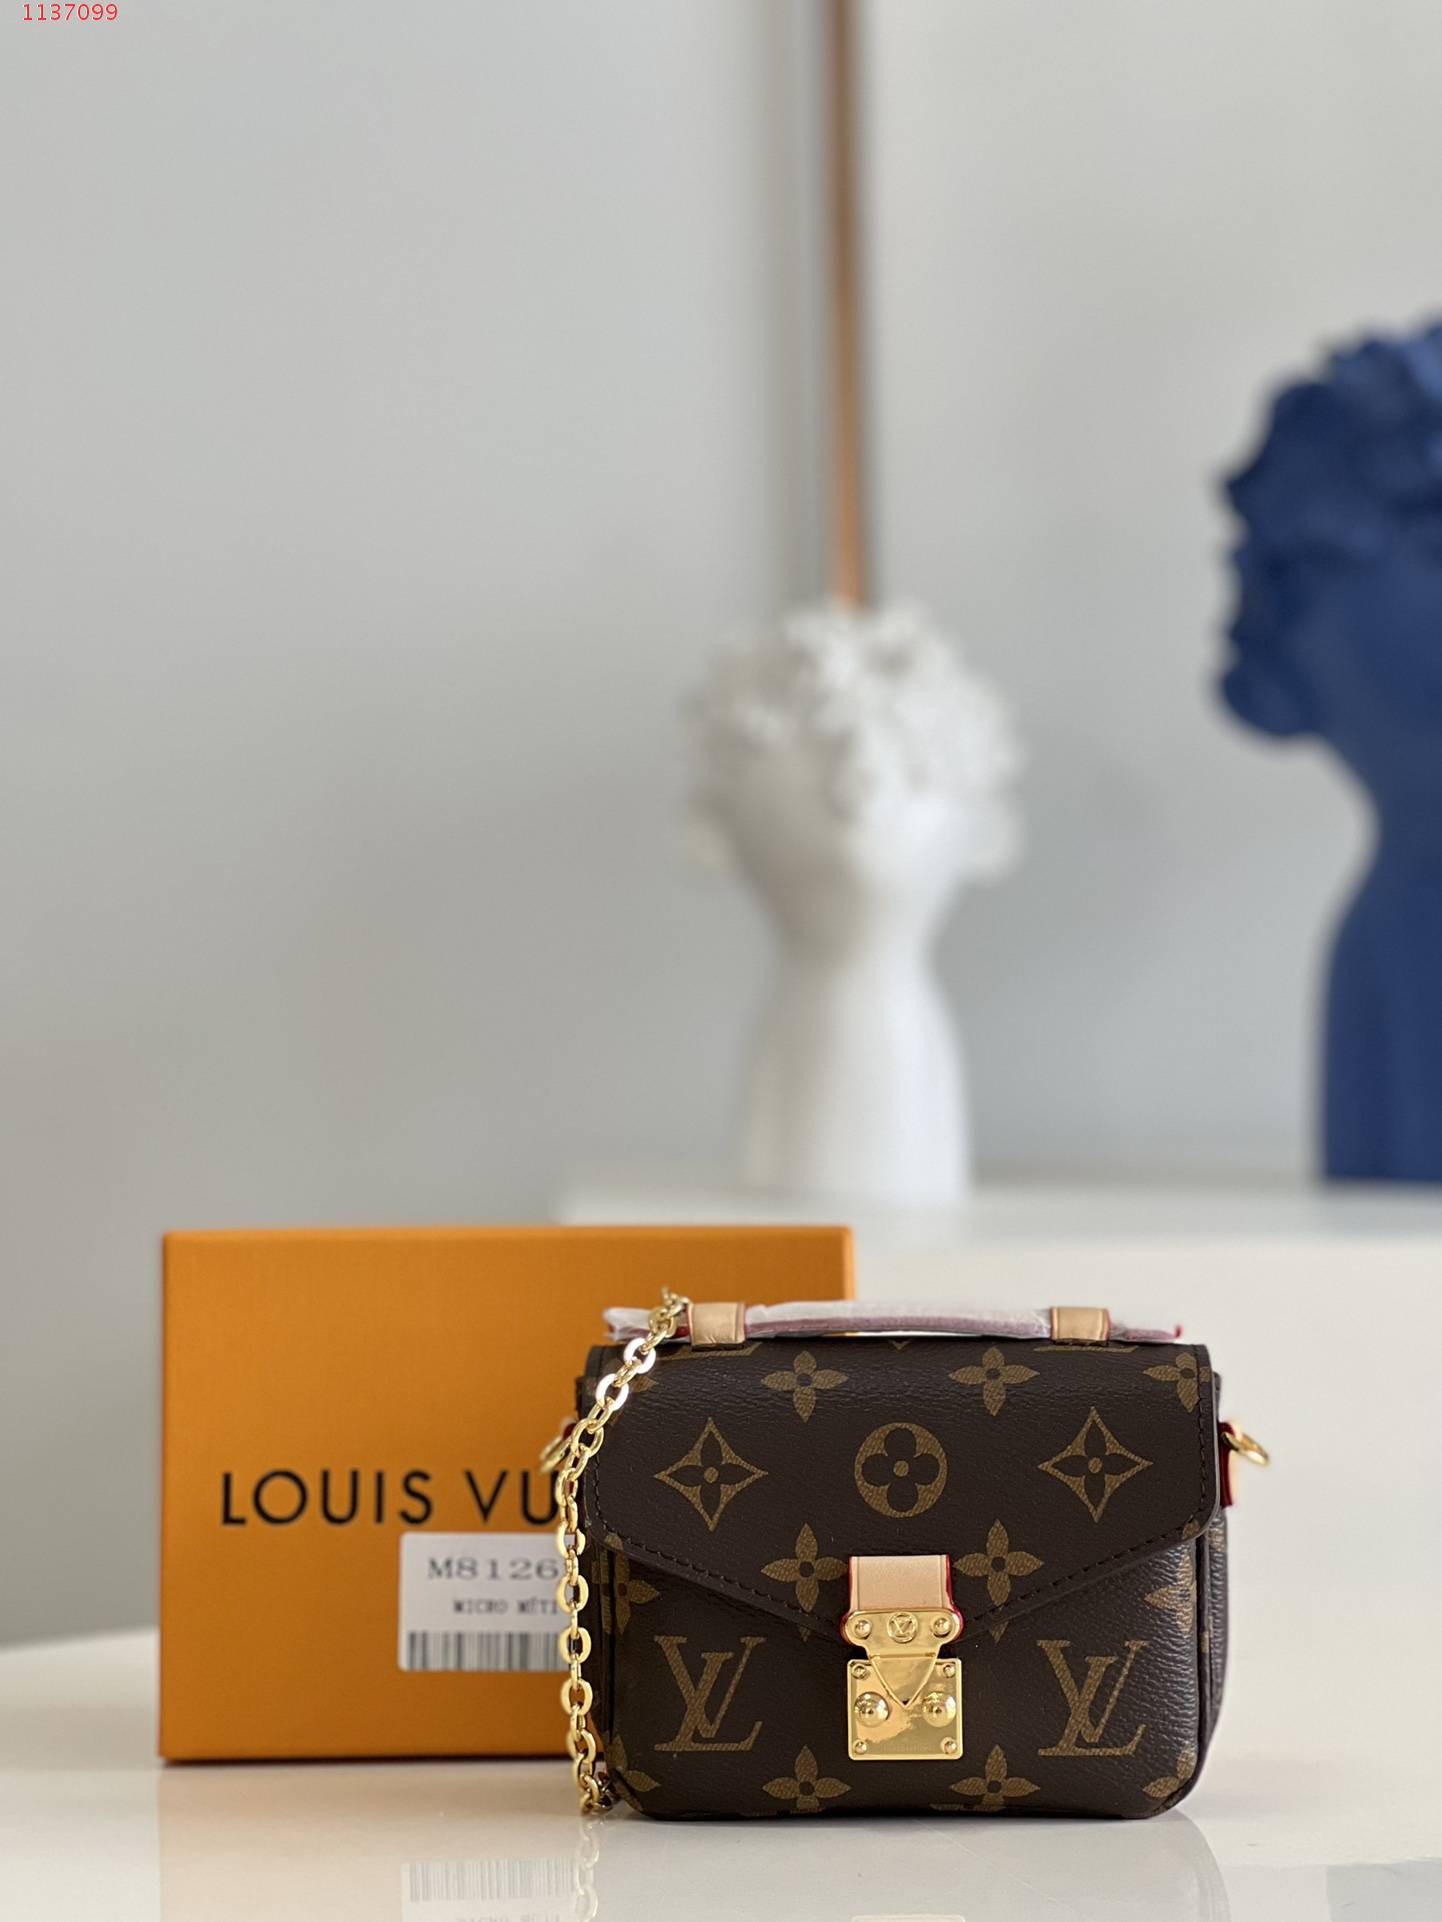 Chinelo Louis Vuitton Monogram Black - LLebu: A melhor